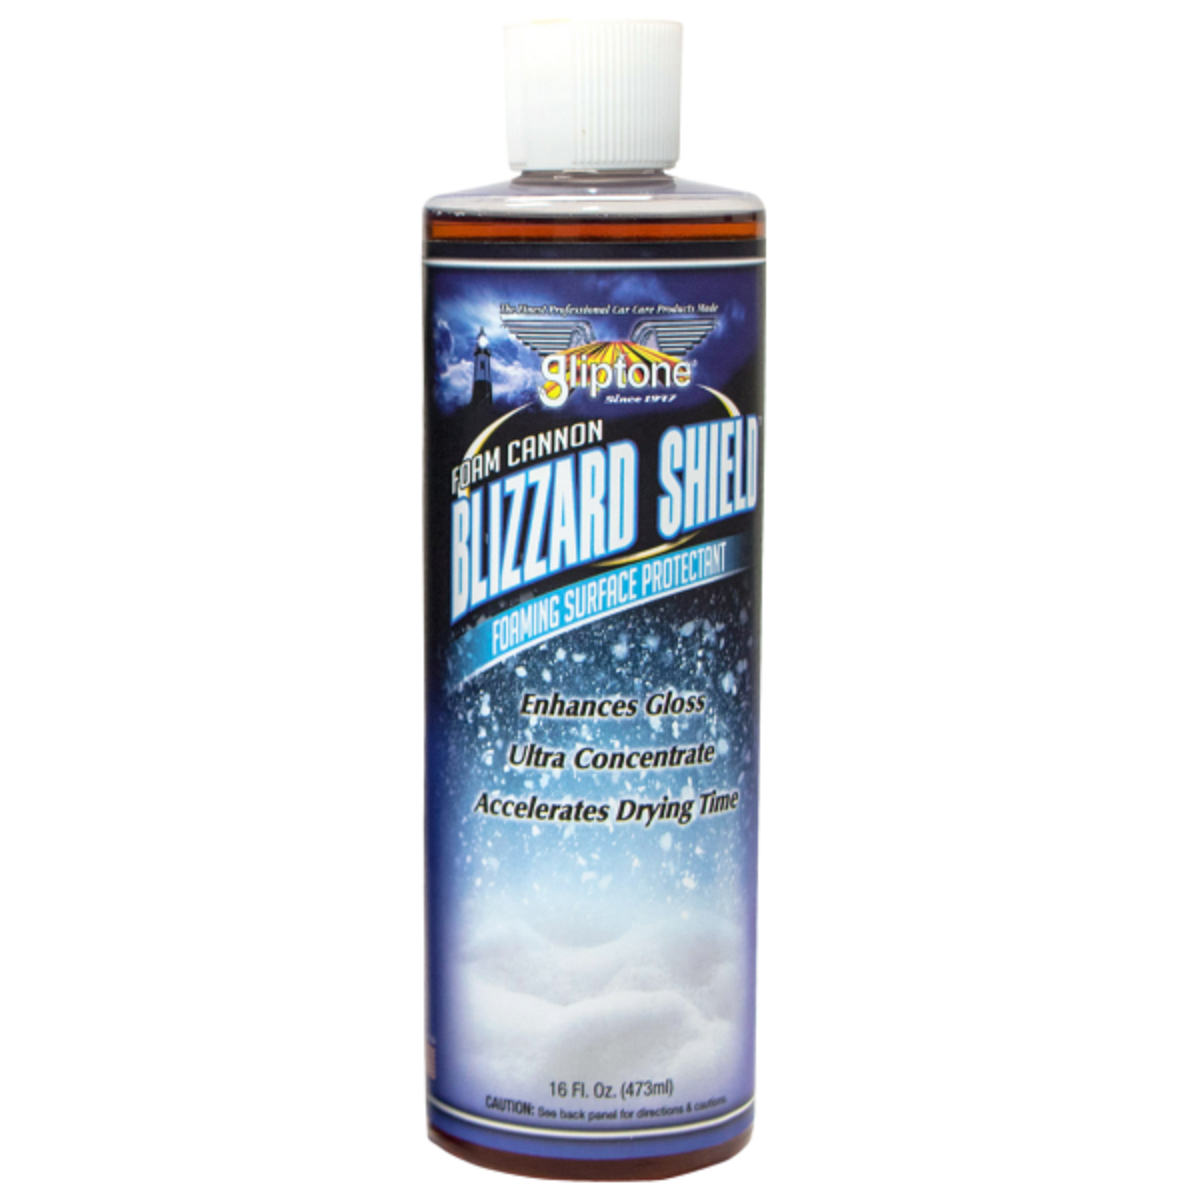 BLIZZARD SHIELD, Foam Surface Protection 16 oz